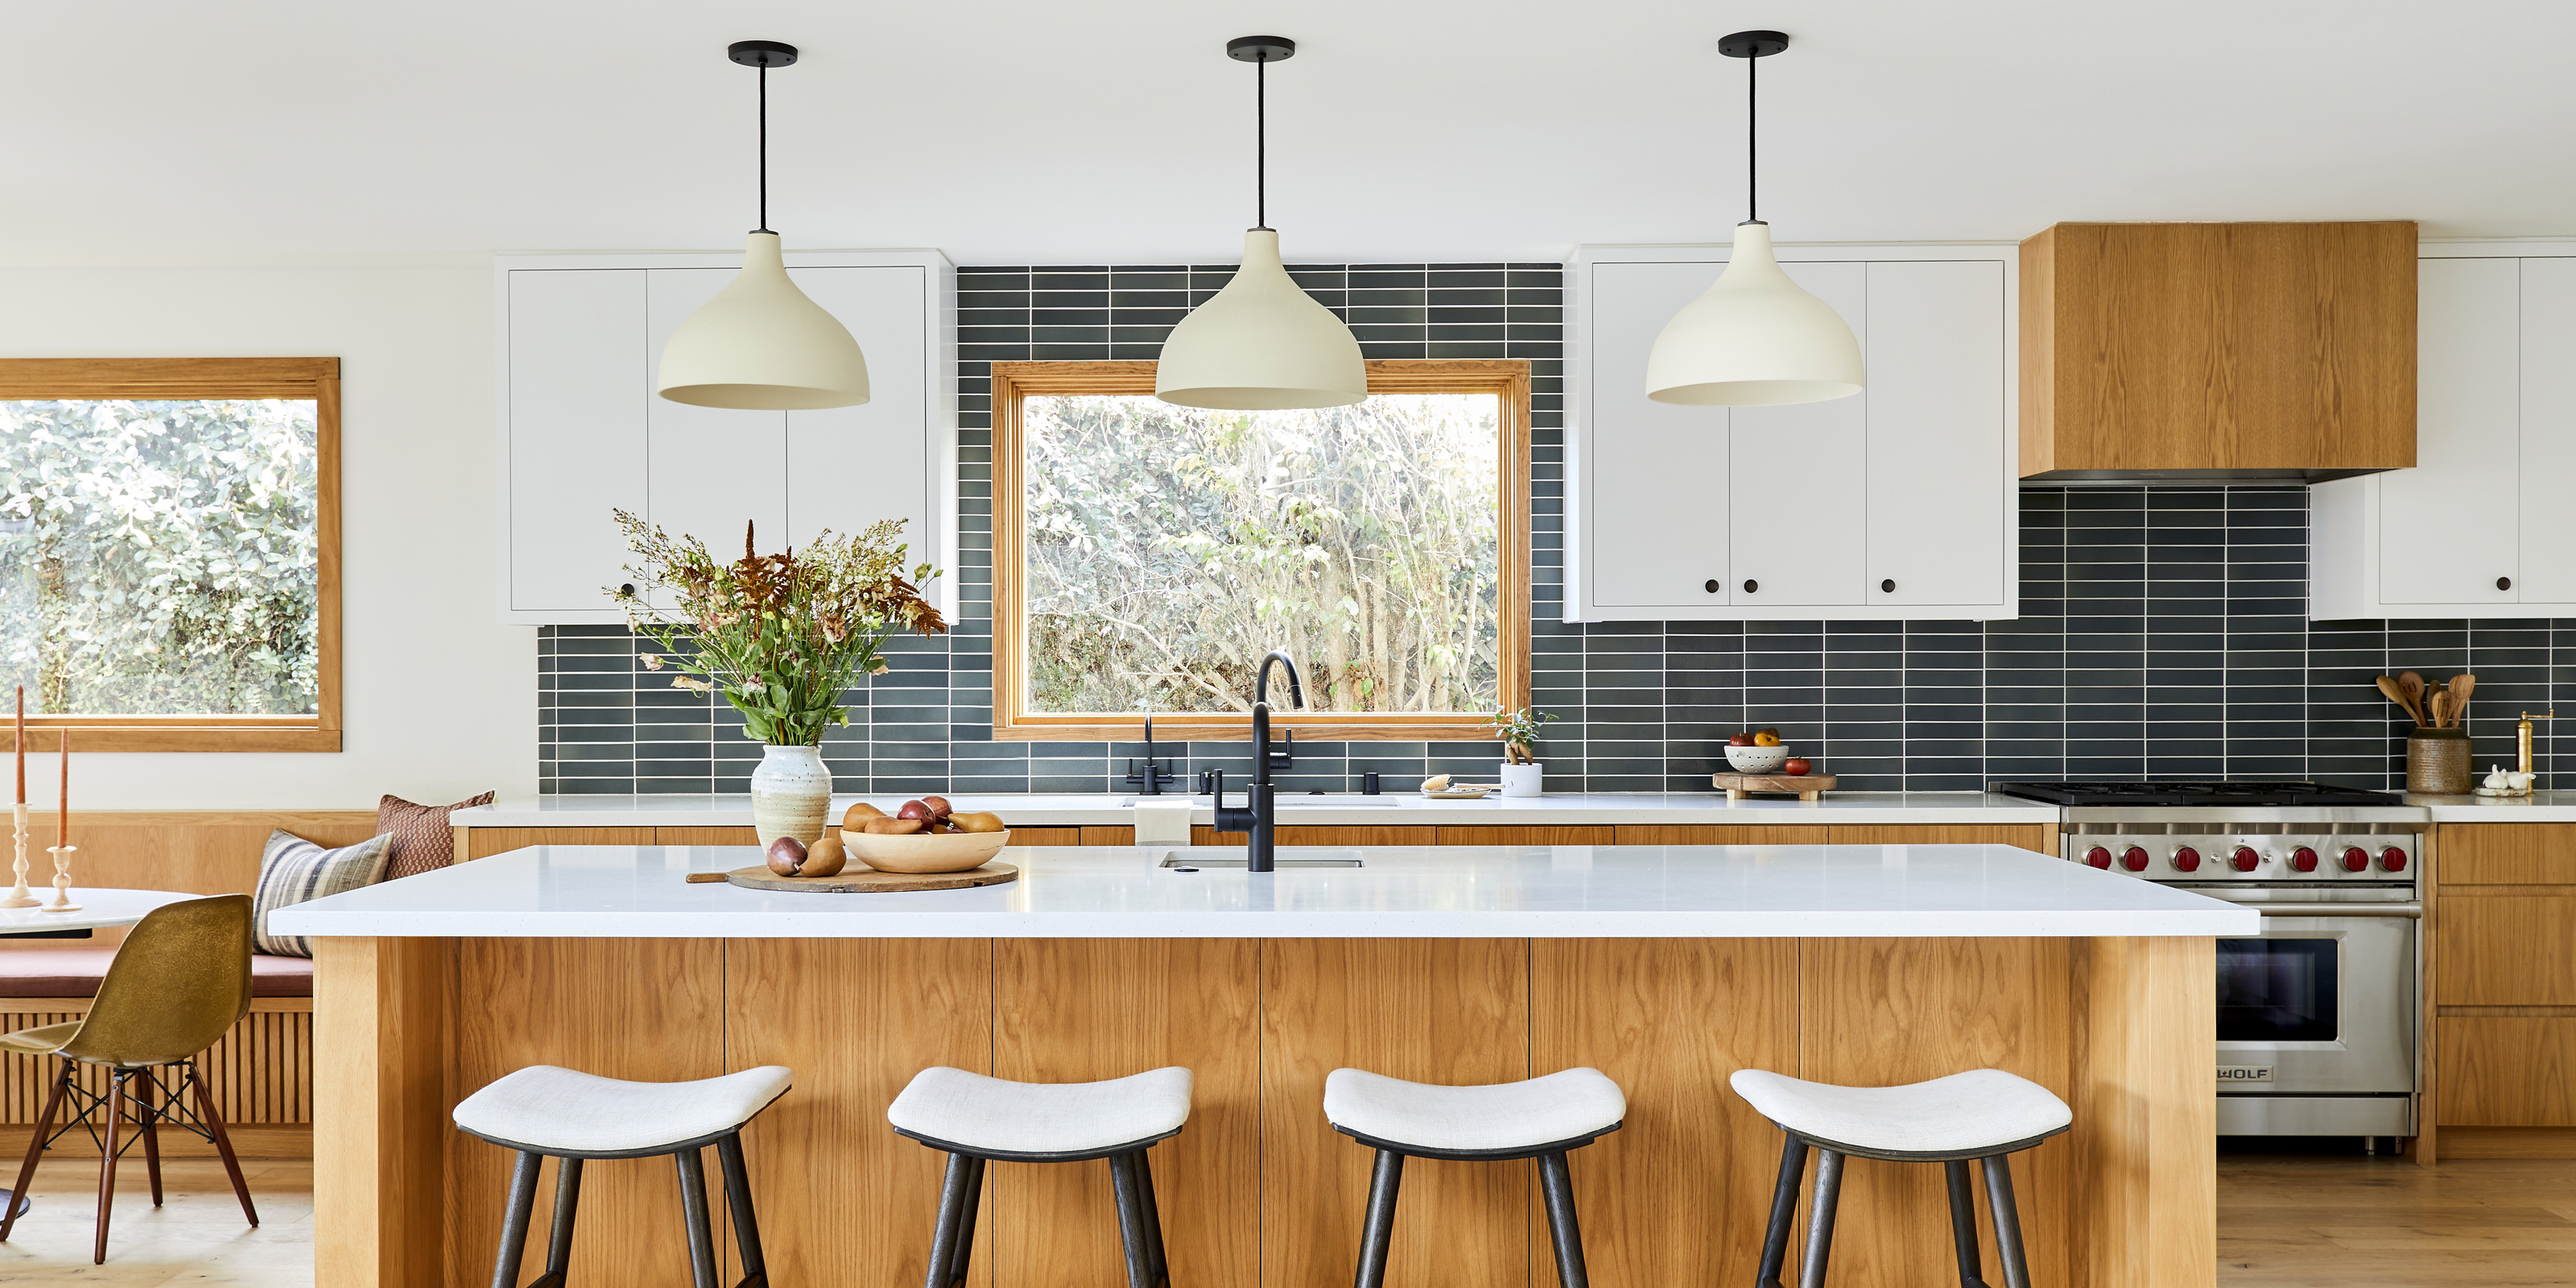 plus Puur Paradox Kitchen lighting ideas: 45 lights designs to set the scene 